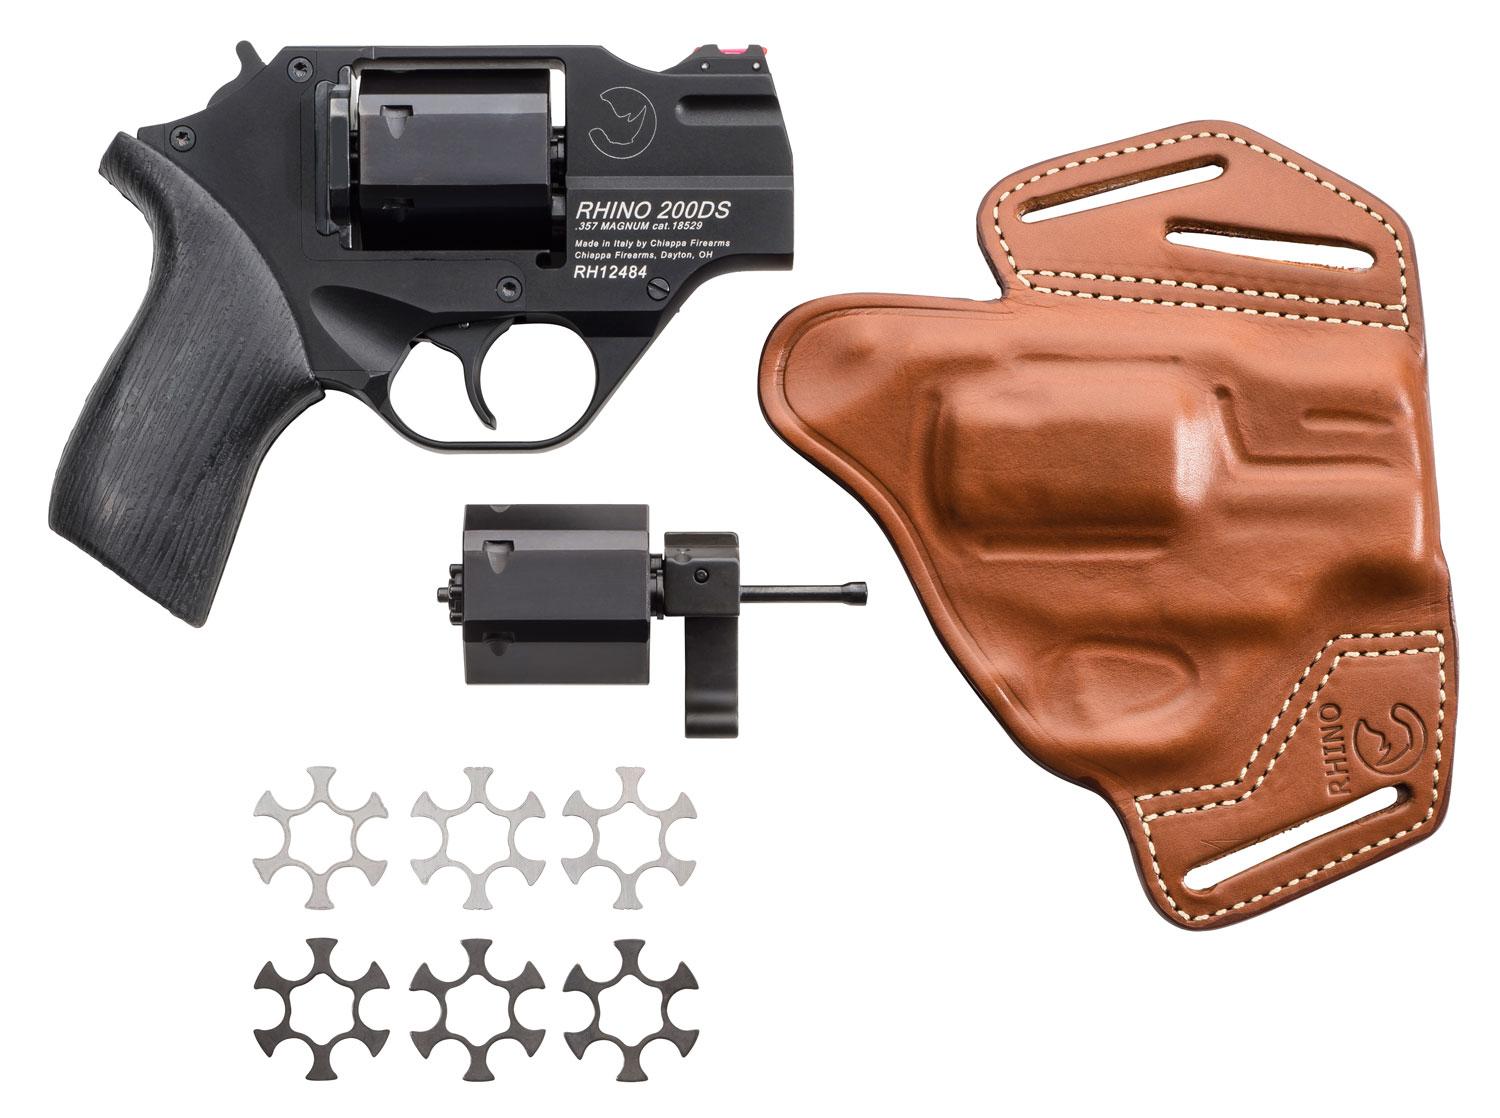 Chiappa Rhino 200DS Revolver 340218, 357 Magnum, 2", Black Rubber Grips, Chrome Aluminum Alloy Finish, 6 Rds